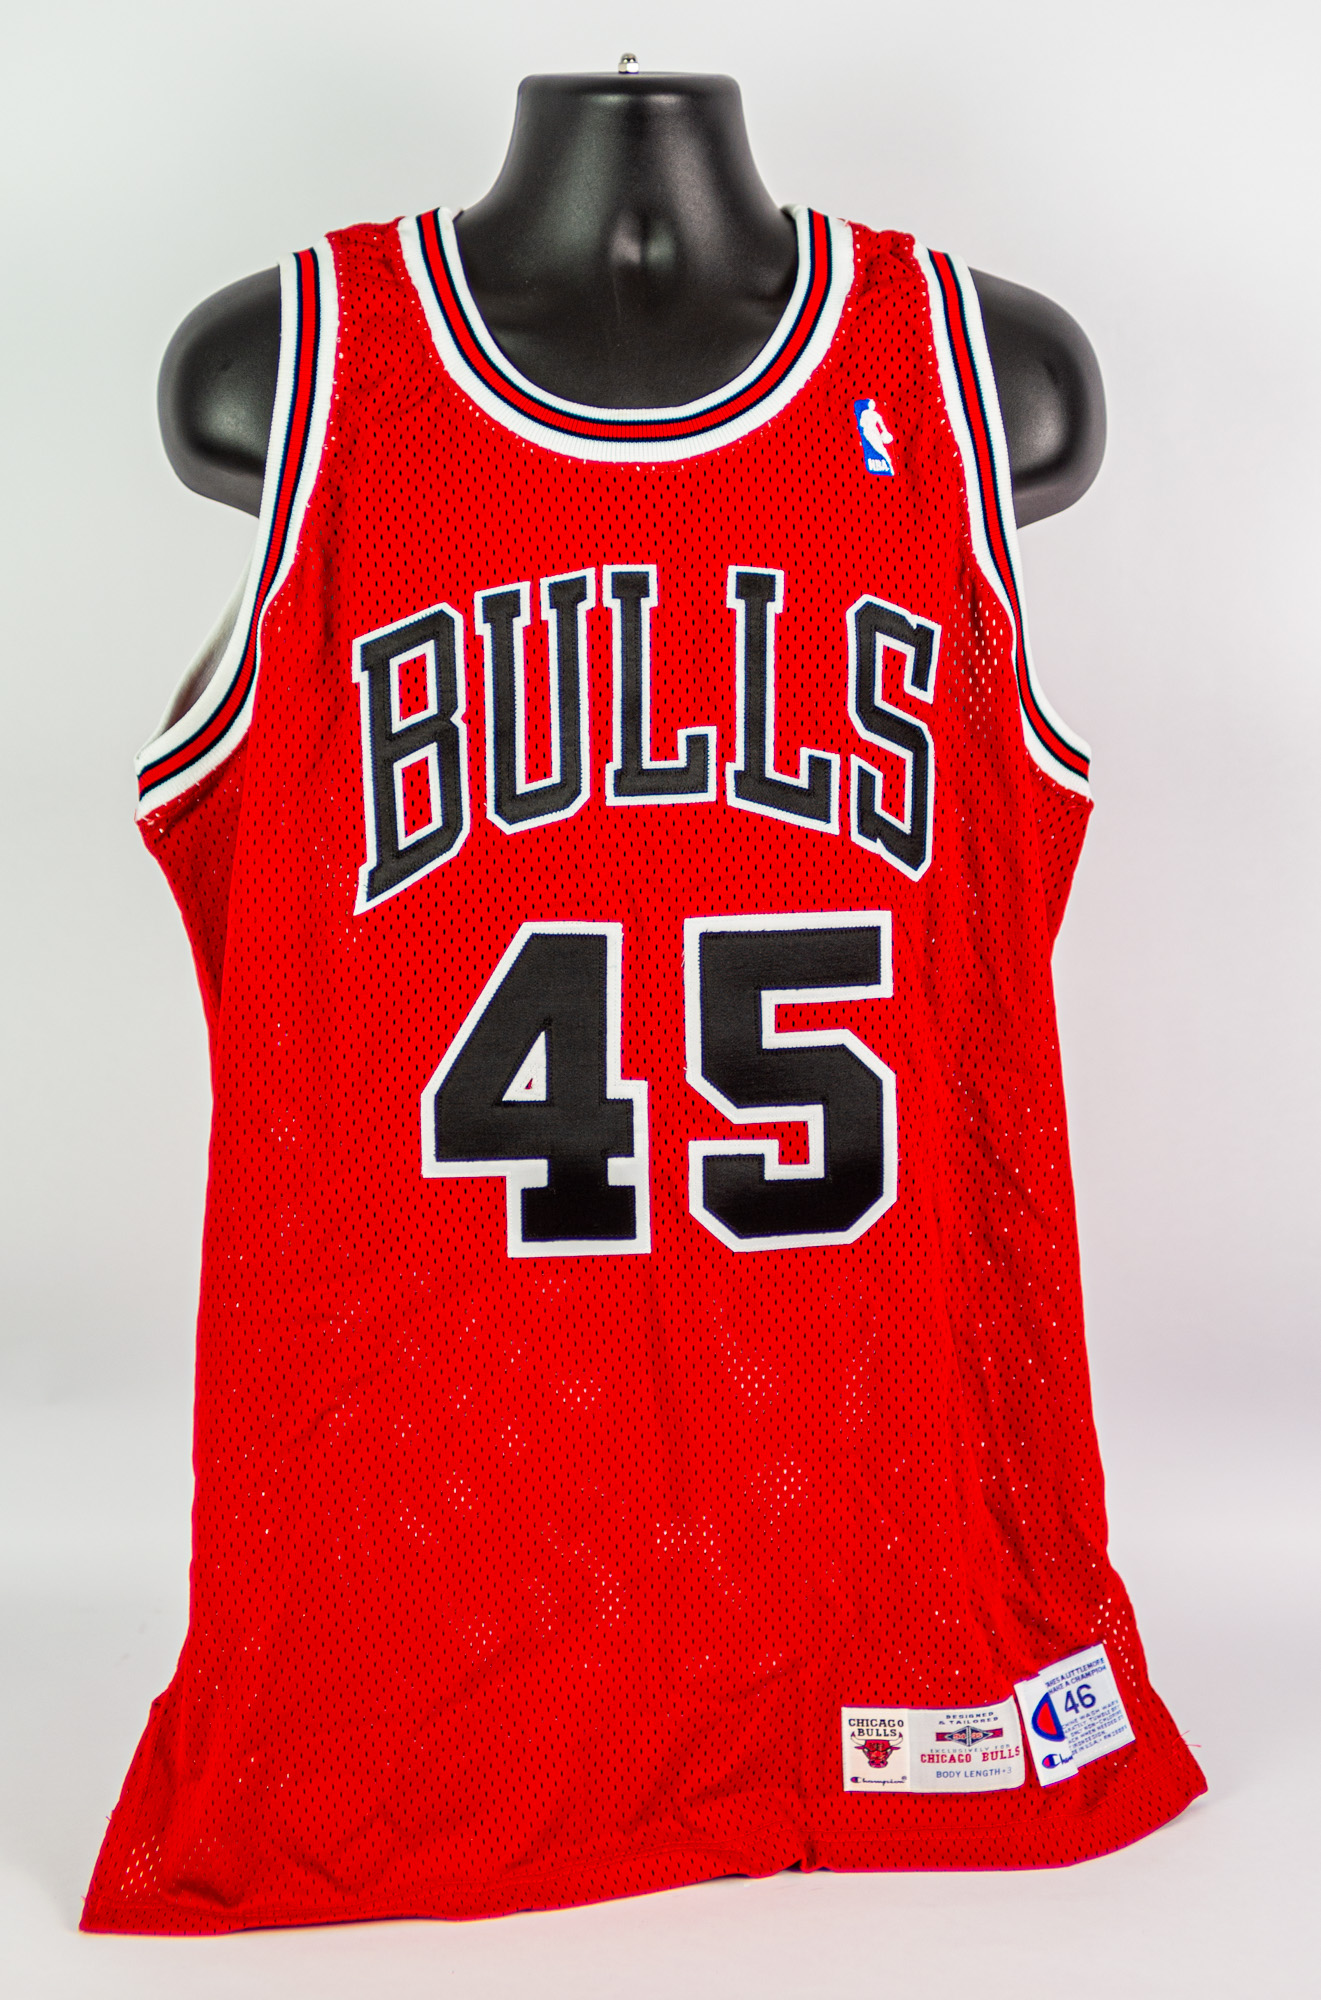 CHAMPION - CHICAGO Bulls Michael Jordan Pro-Cut jersey (1995) #45